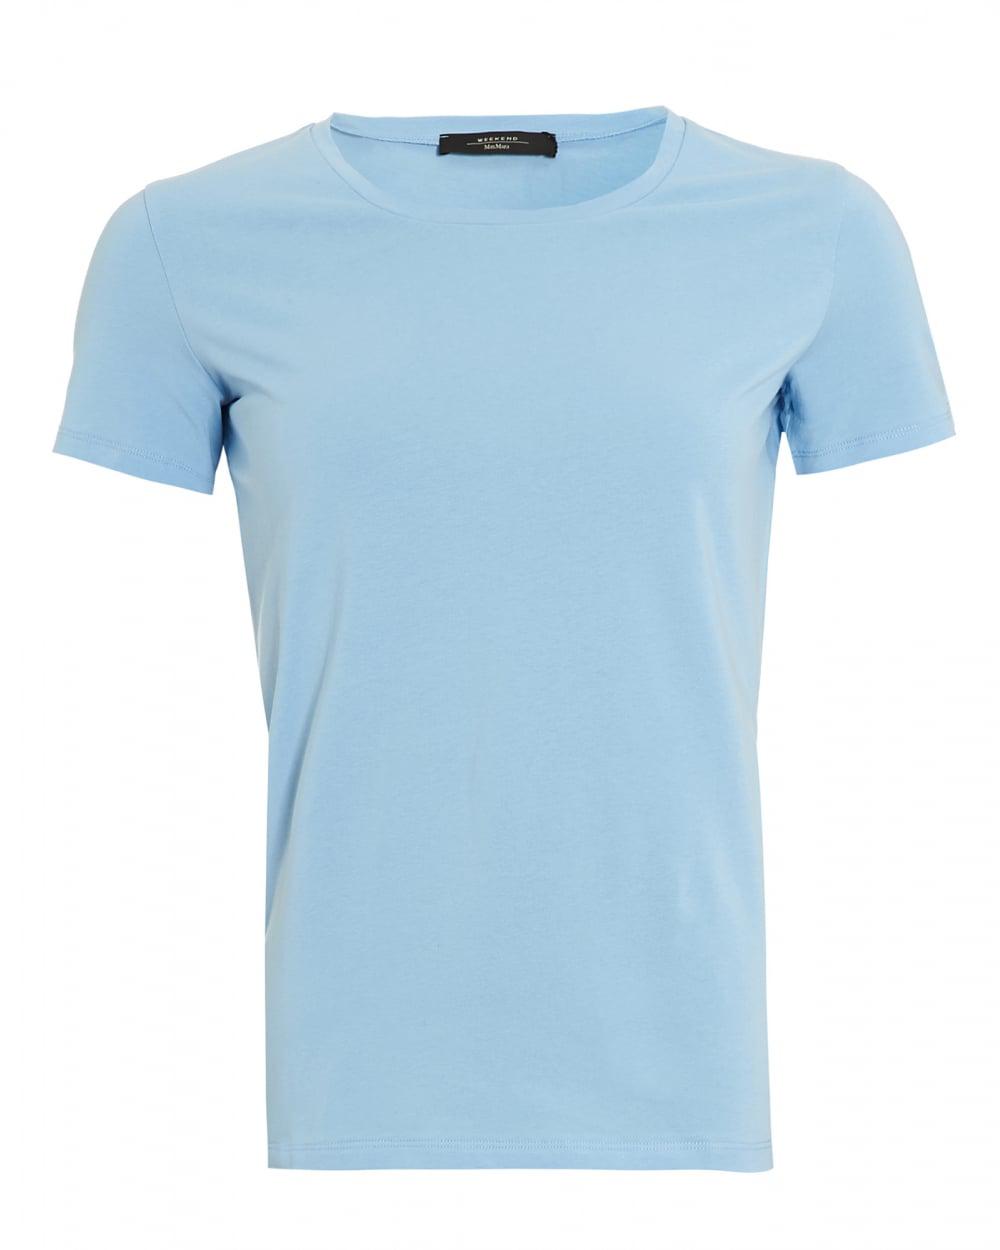 Lyst - Weekend By Maxmara Multi B T-shirt, Sky Blue Tee in Blue for Men